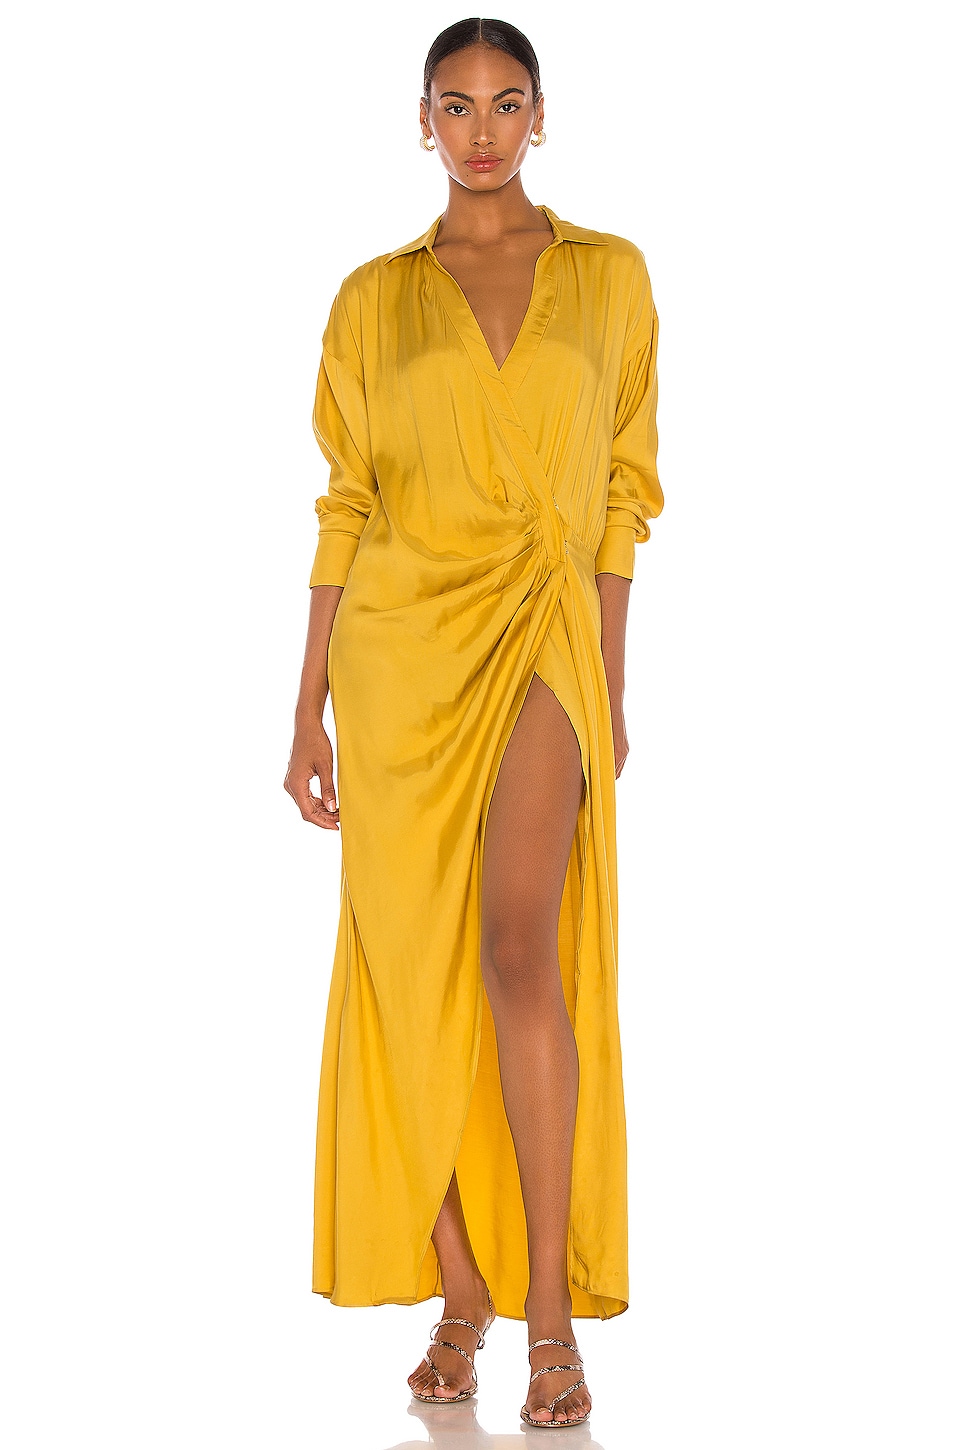 L'Academie The Gigi Maxi Dress in Mustard Yellow | REVOLVE